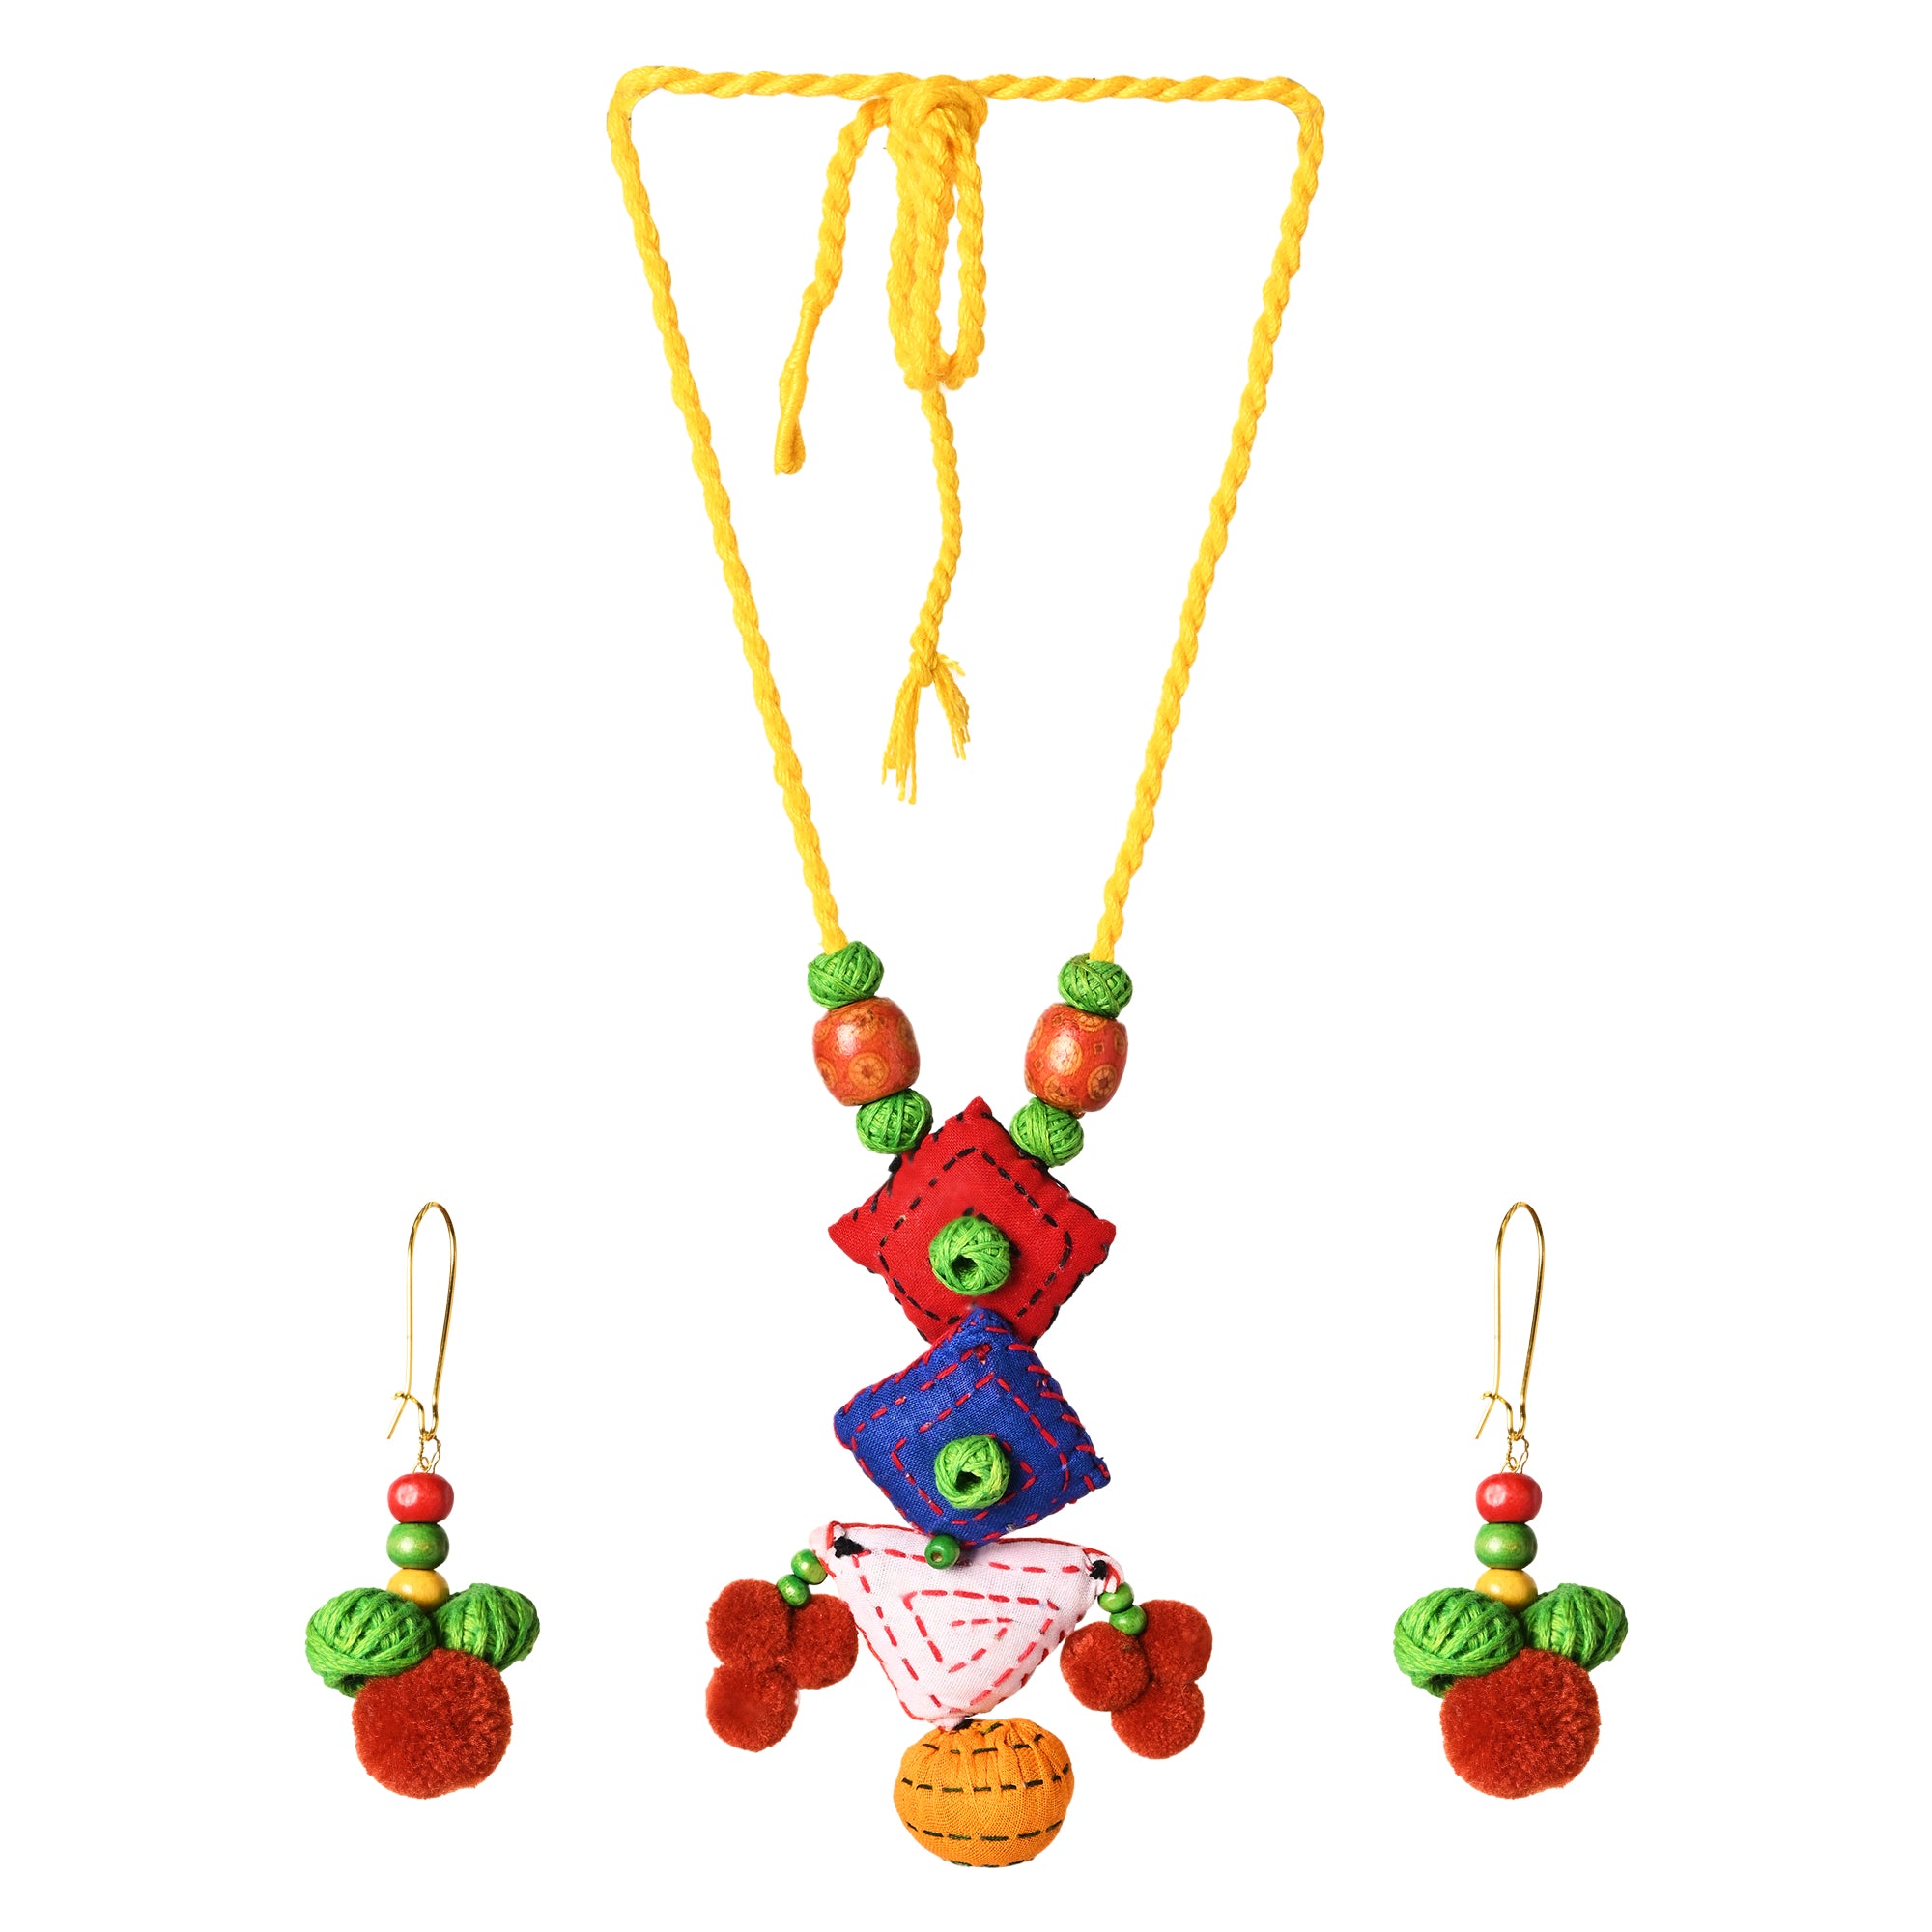 Fabric beads necklace set